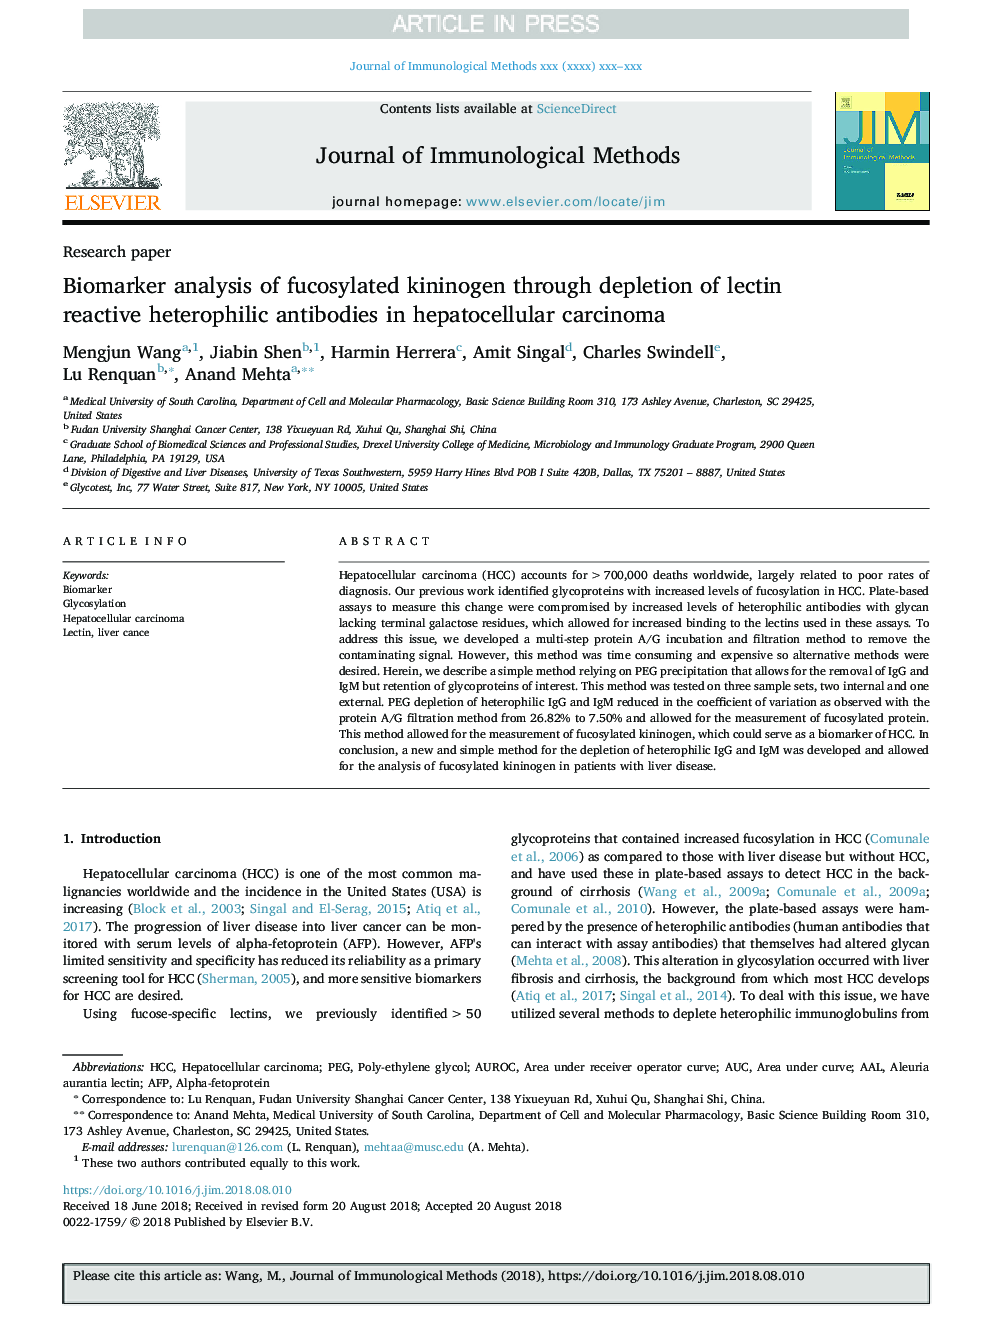 Biomarker analysis of fucosylated kininogen through depletion of lectin reactive heterophilic antibodies in hepatocellular carcinoma